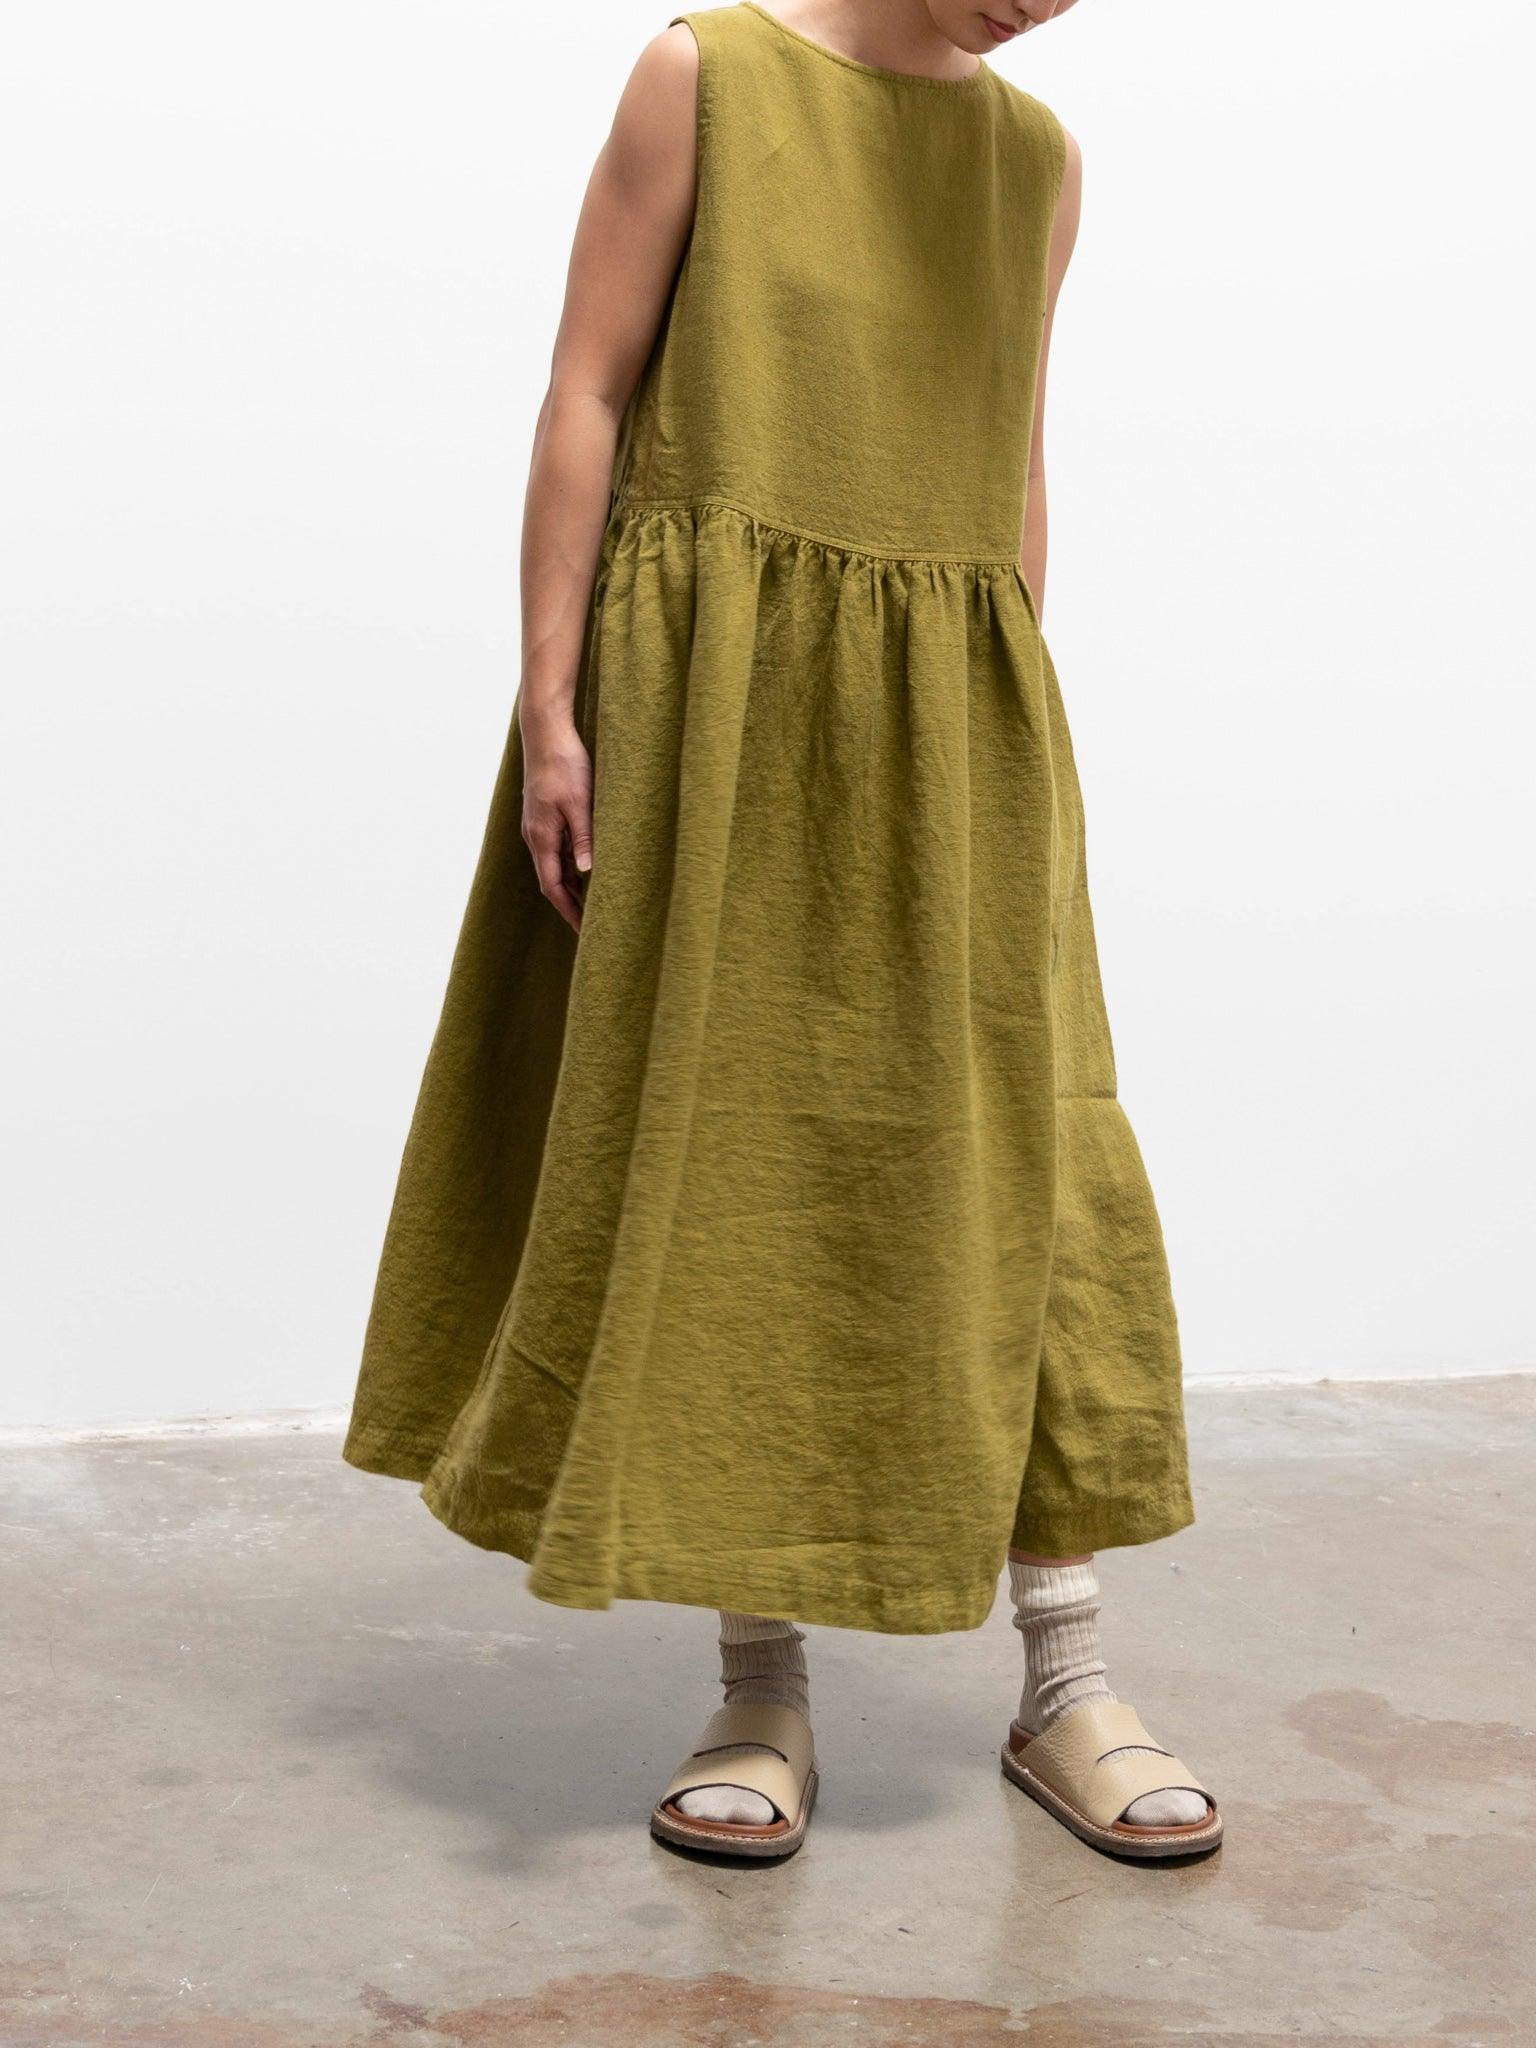 Namu Shop - Ichi Antiquites Azumadaki Sleeveless Dress - Green